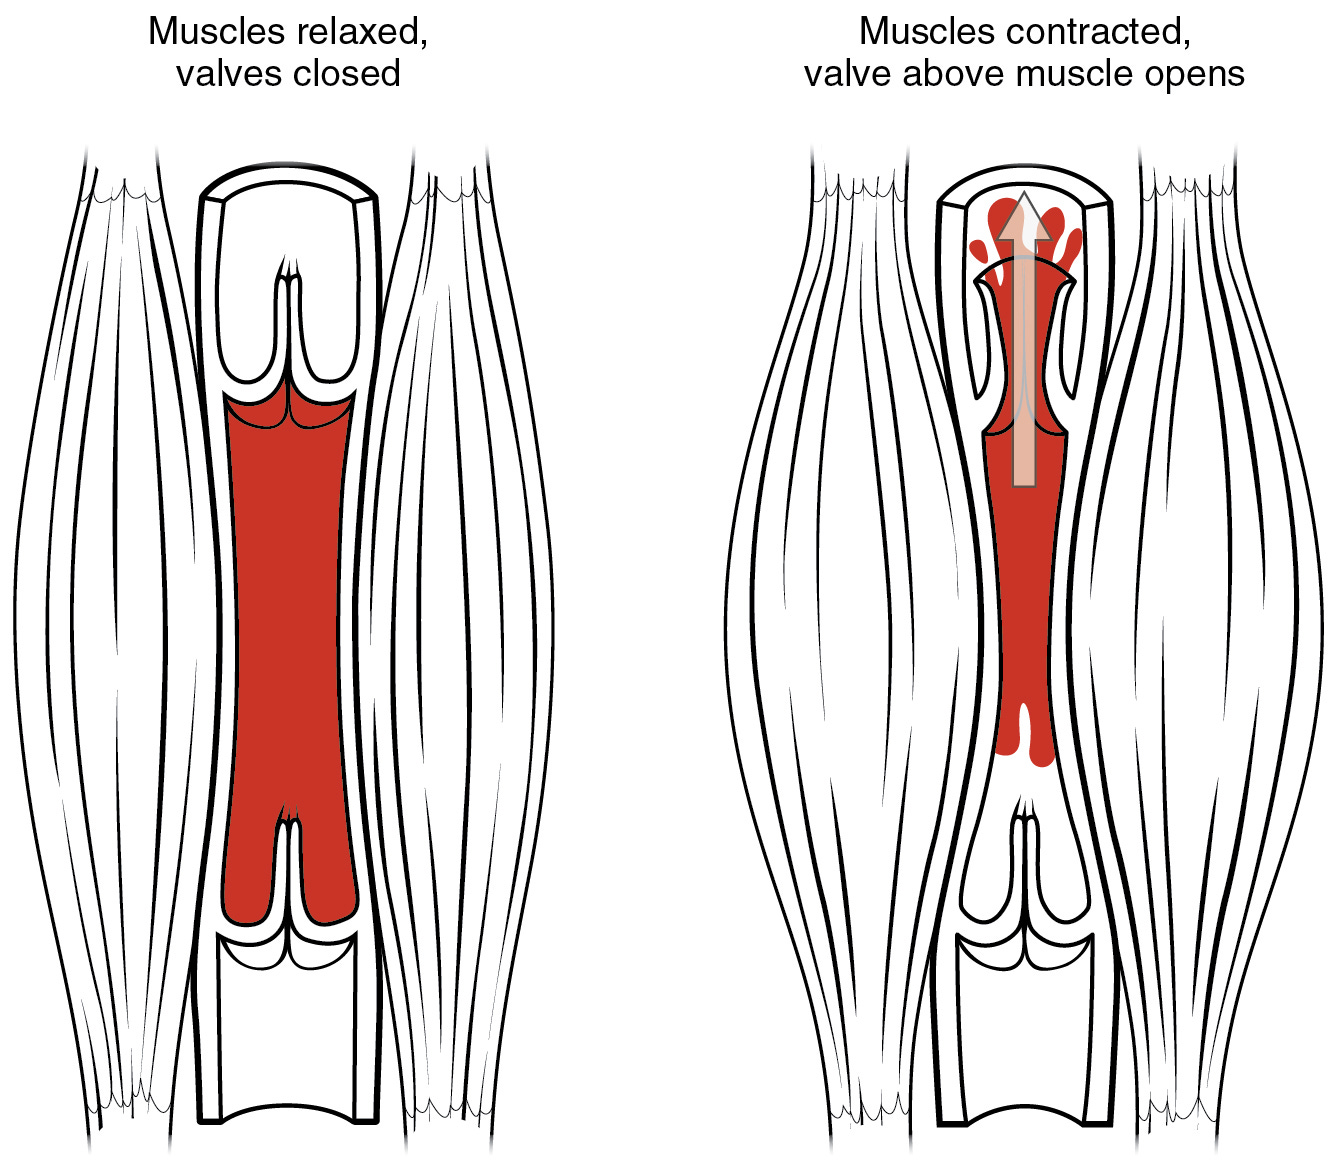 Skeletal muscle pump - Wikipedia